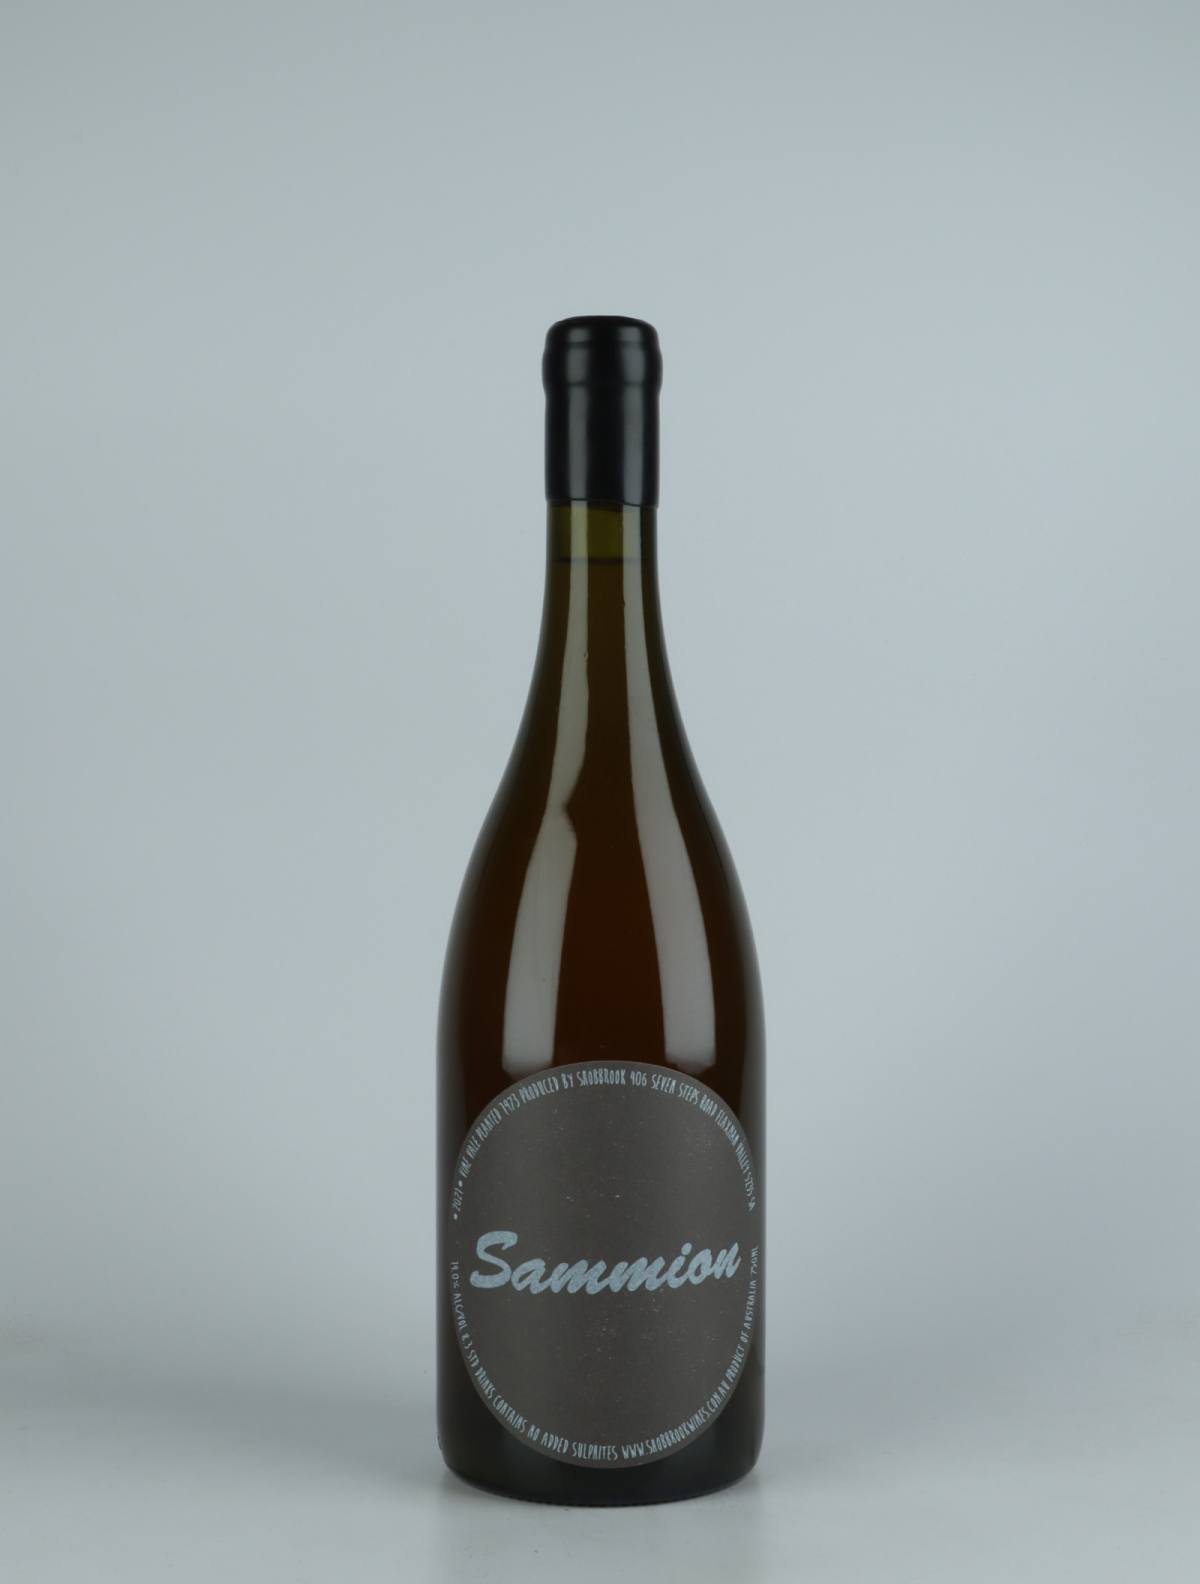 A bottle 2021 Sammion White wine from Tom Shobbrook, Barossa Valley in 